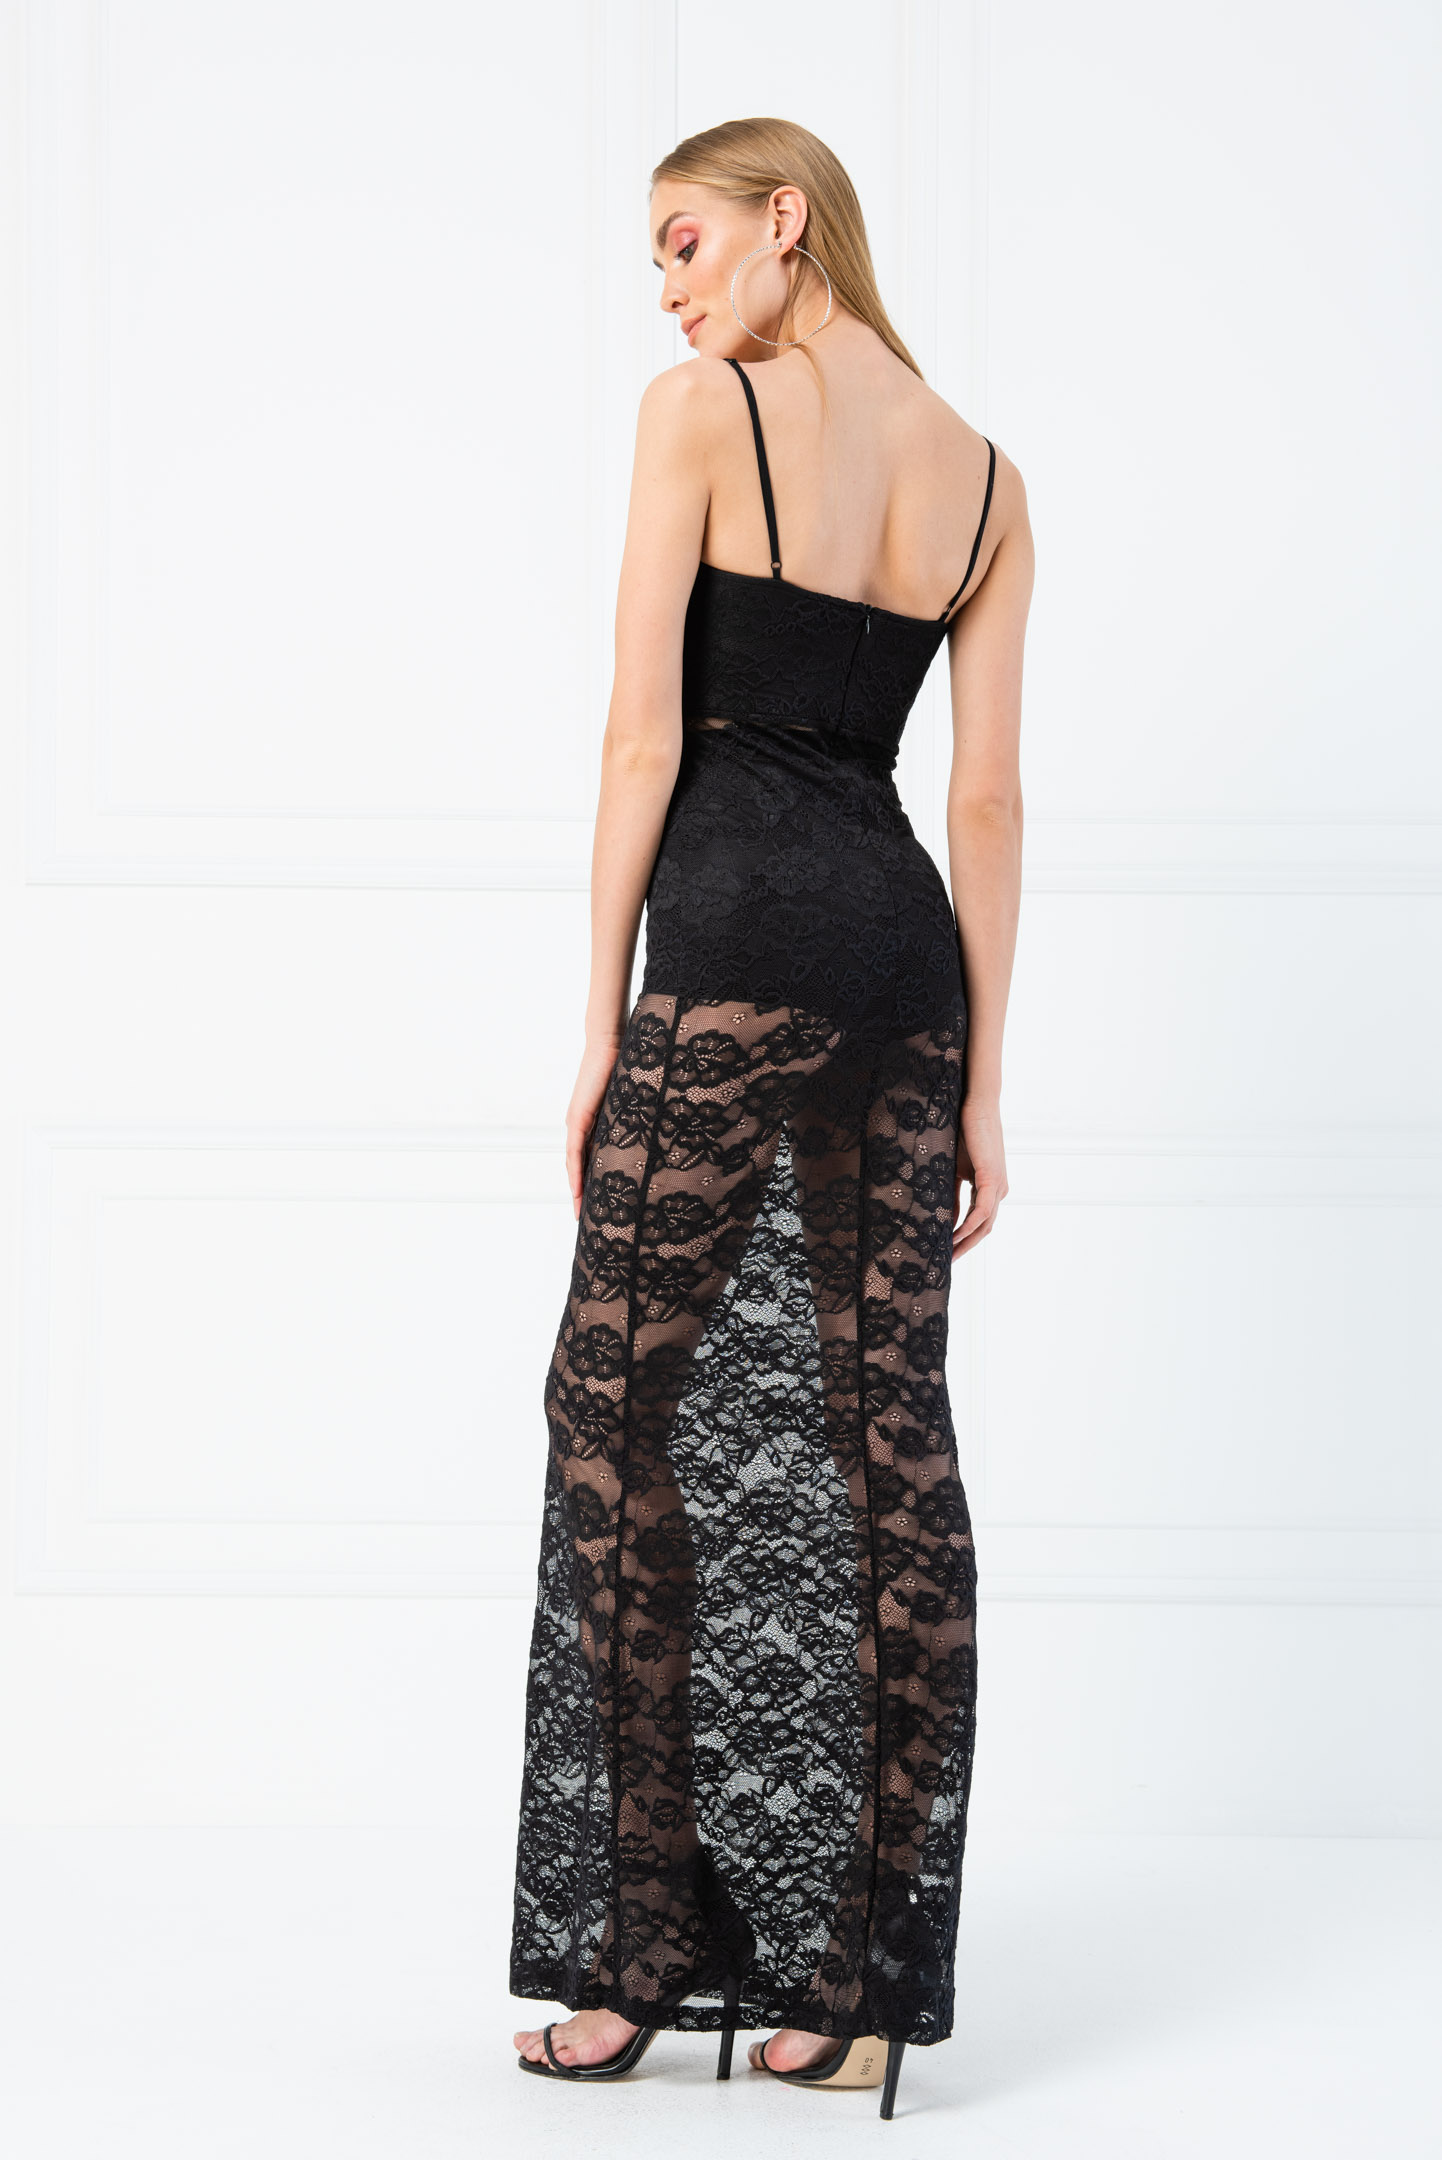 Wholesale Sheer Black Lace Cami Maxi Dress